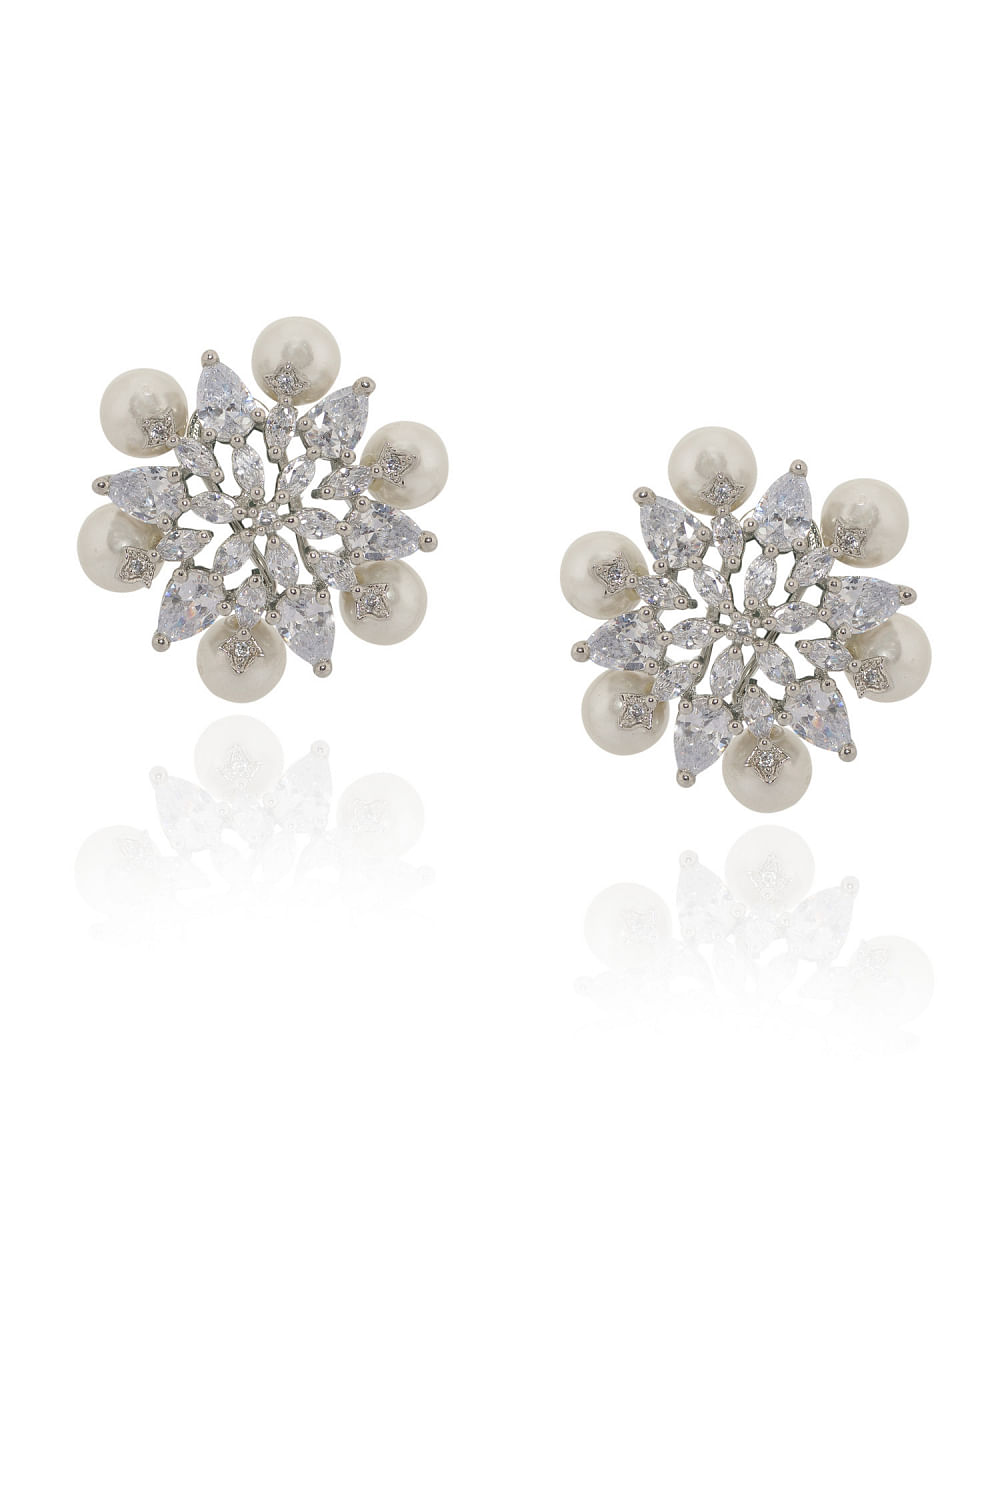 Silver Earrings Designs starting @ Rs. 468 -Shaya by CaratLane